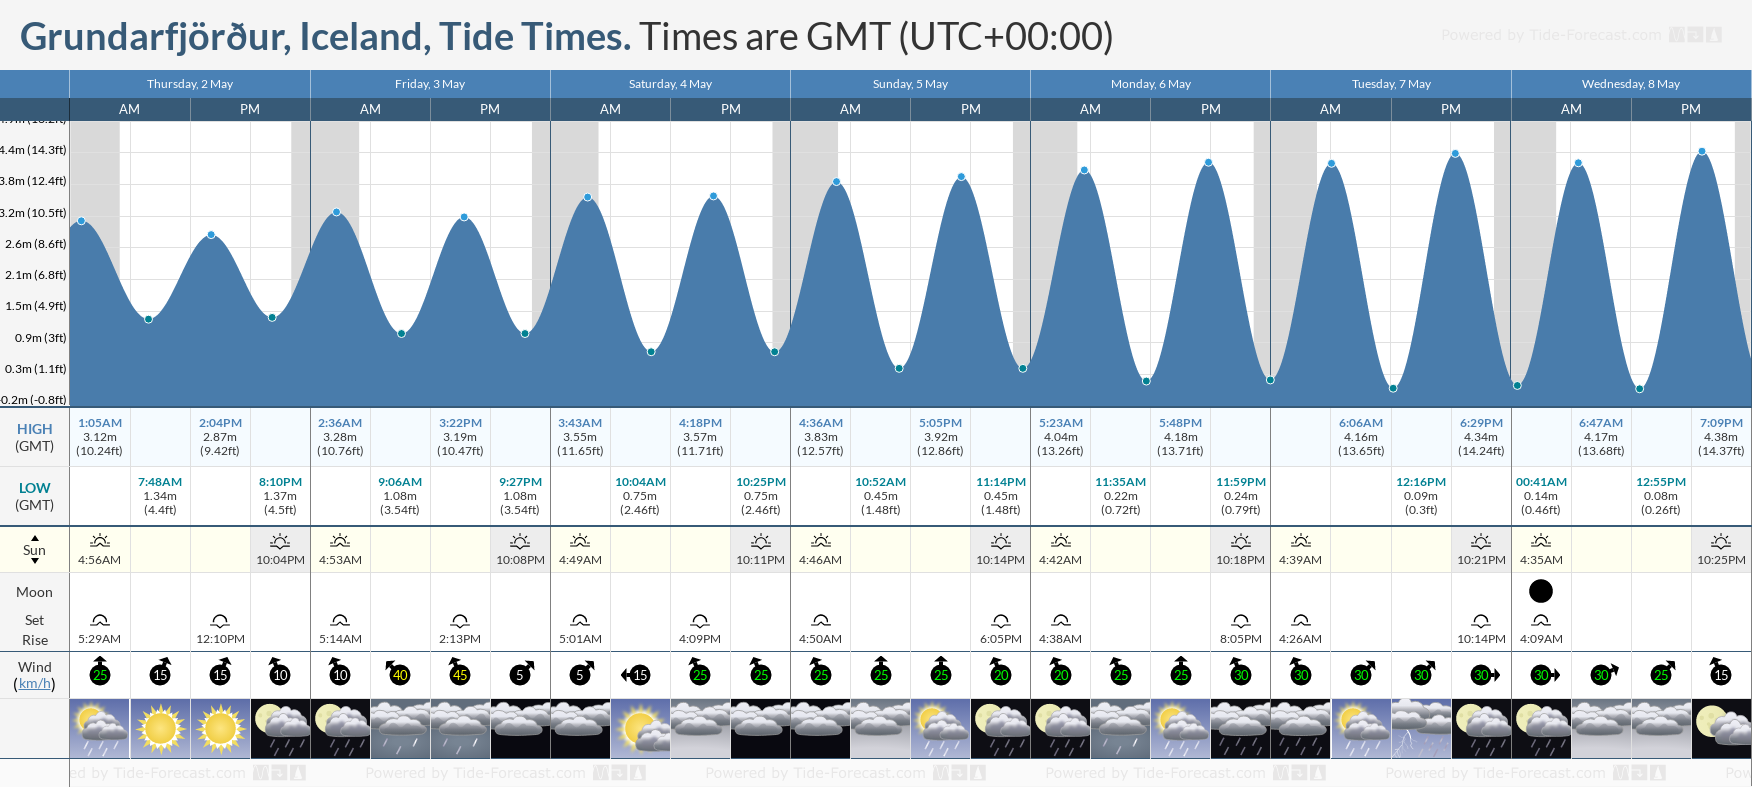 Grundarfjörður, Iceland Tide Chart including high and low tide tide times for the next 7 days